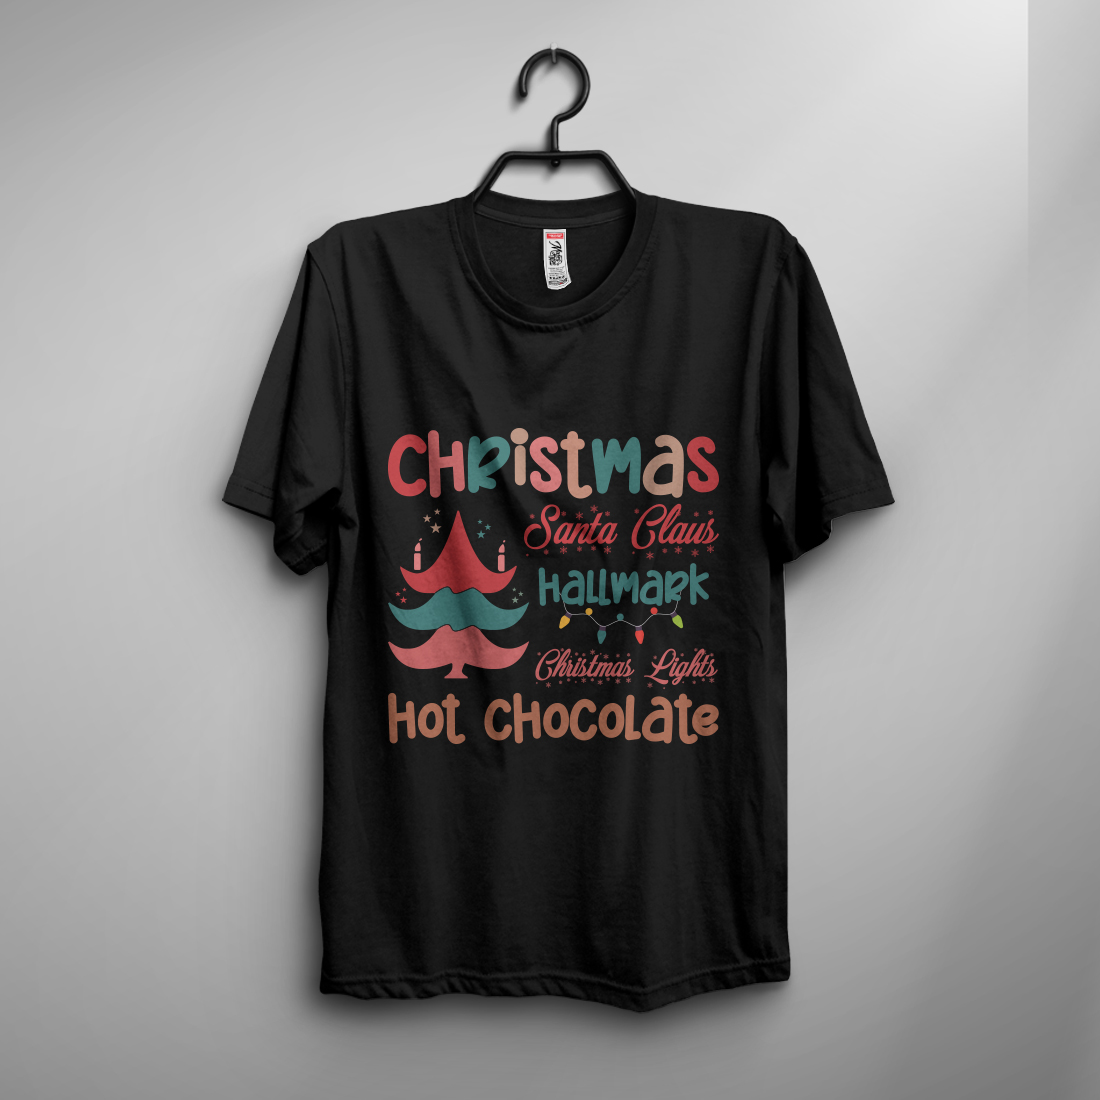 Christmas santa claus hallmark christmas lights hot chocolate T-shirt design cover image.